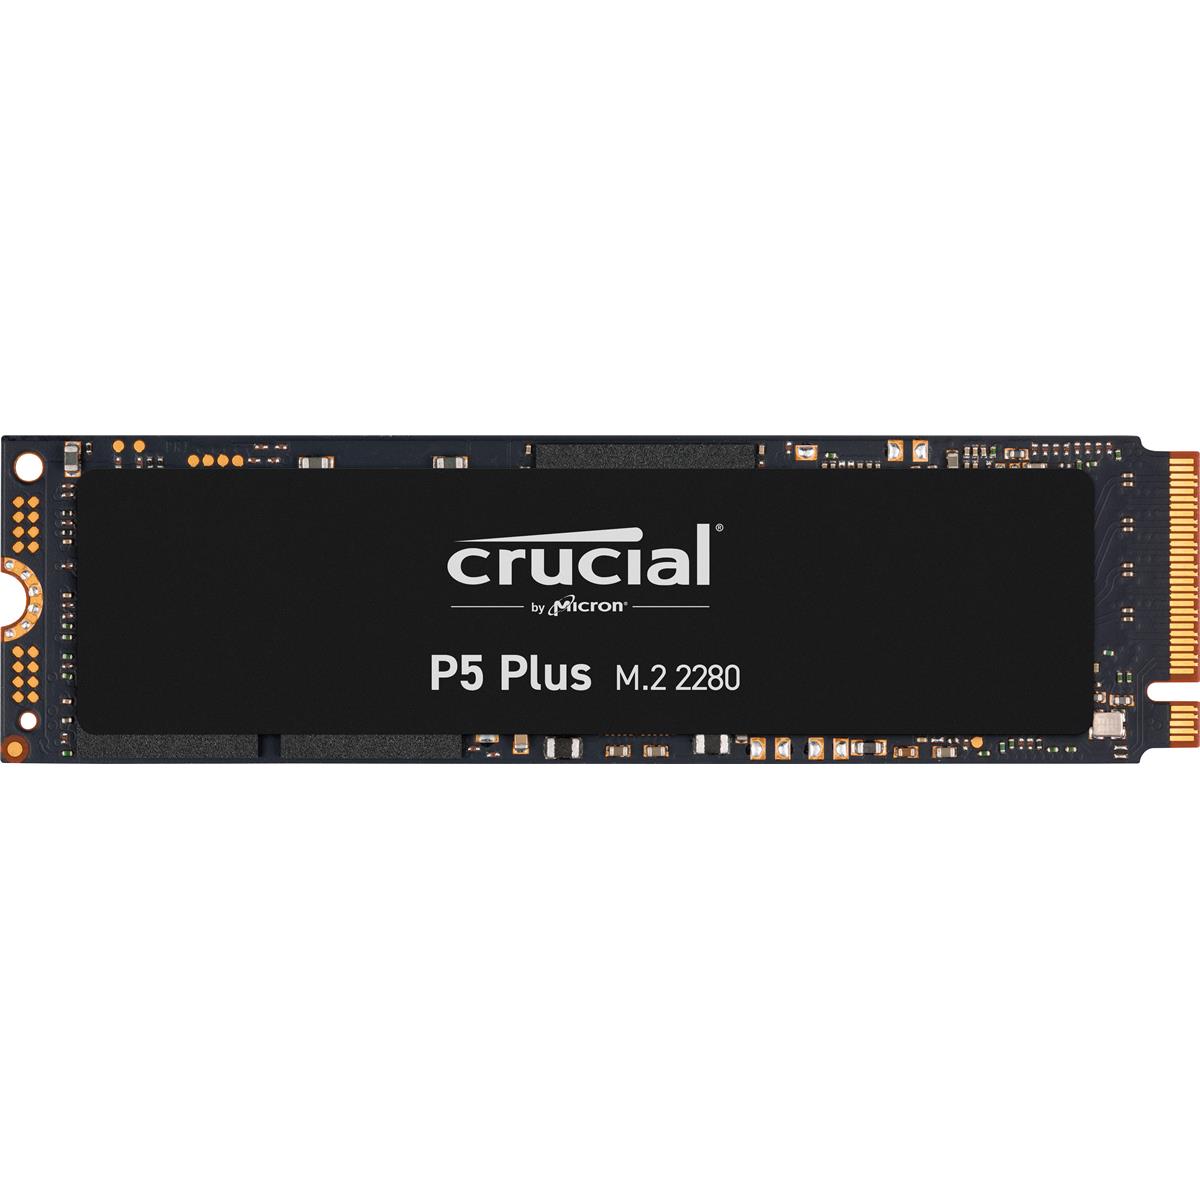 Crucial P5 Plus PCIe 4.0 SSD's: 1TB $149, 2TB $310 + free s/h at Adorama